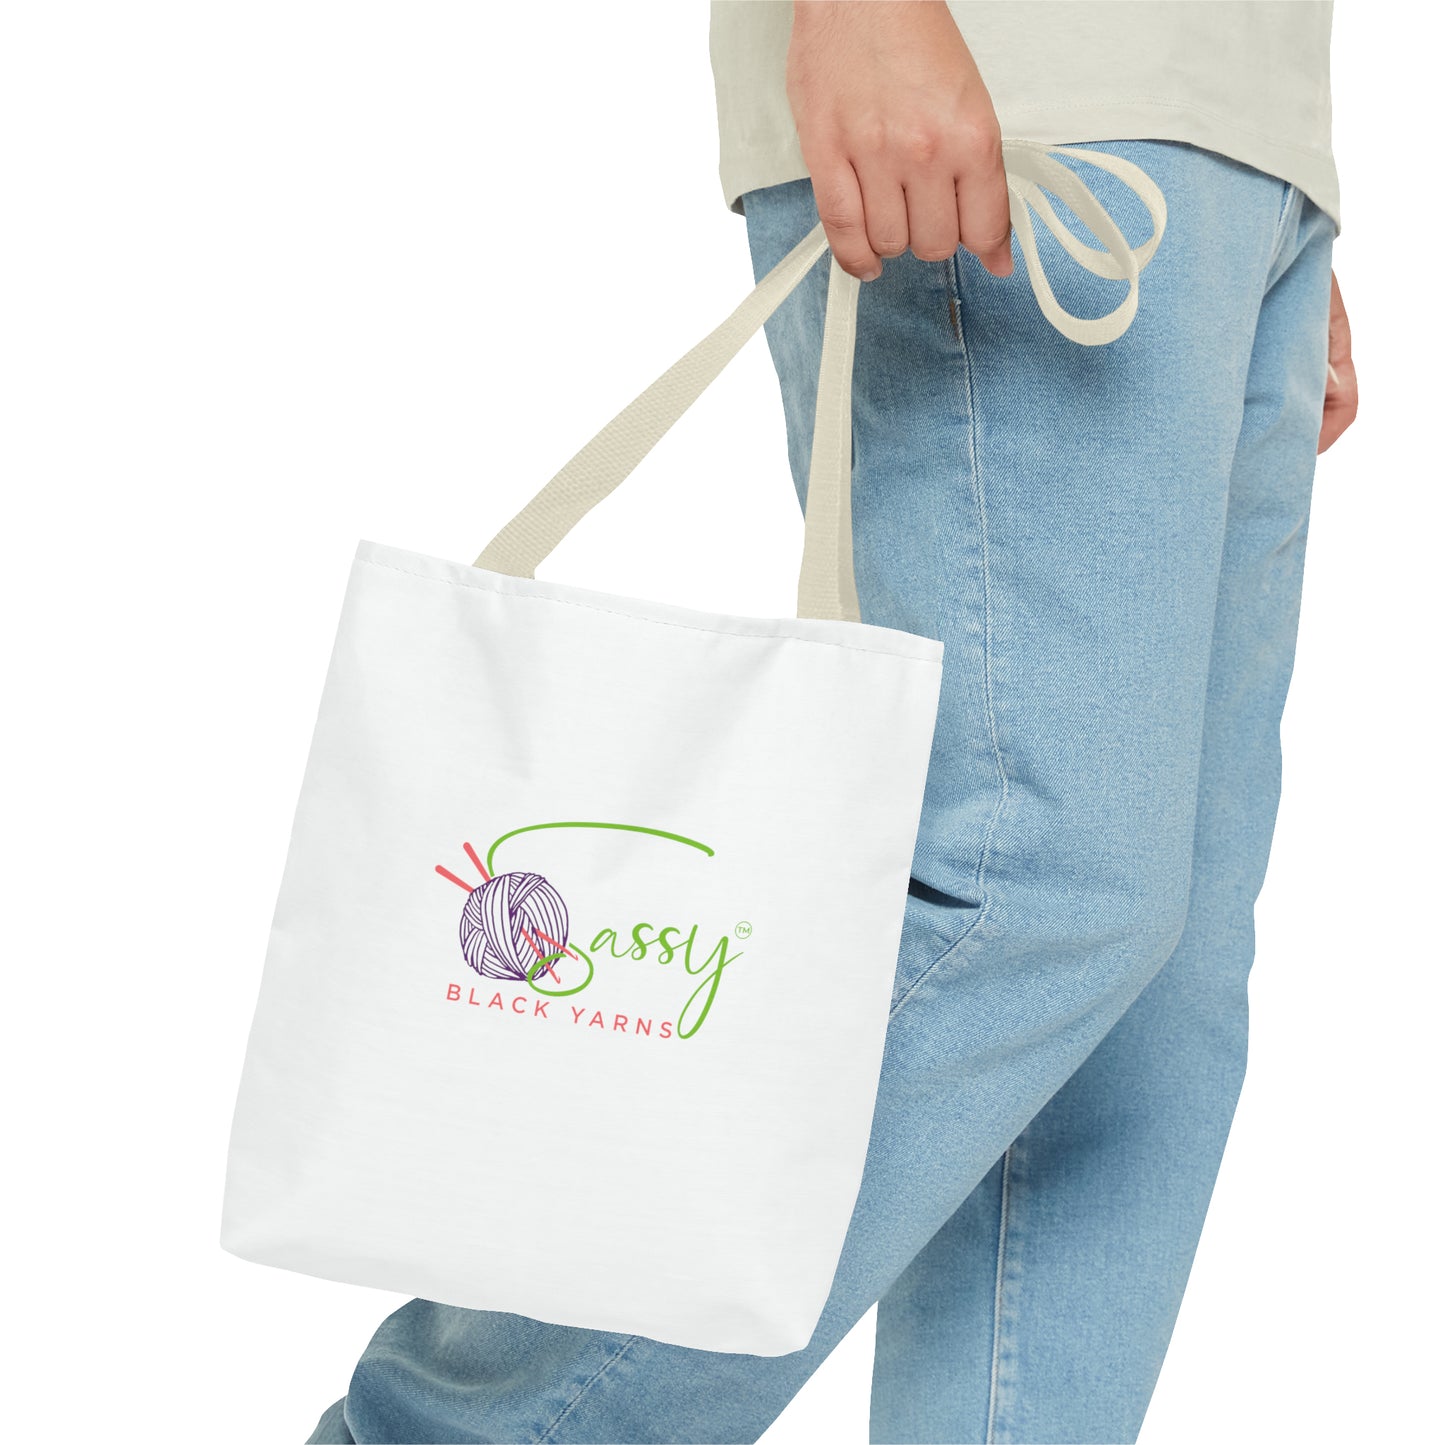 Sassy Black Yarns - Colored Handle Tote Bags